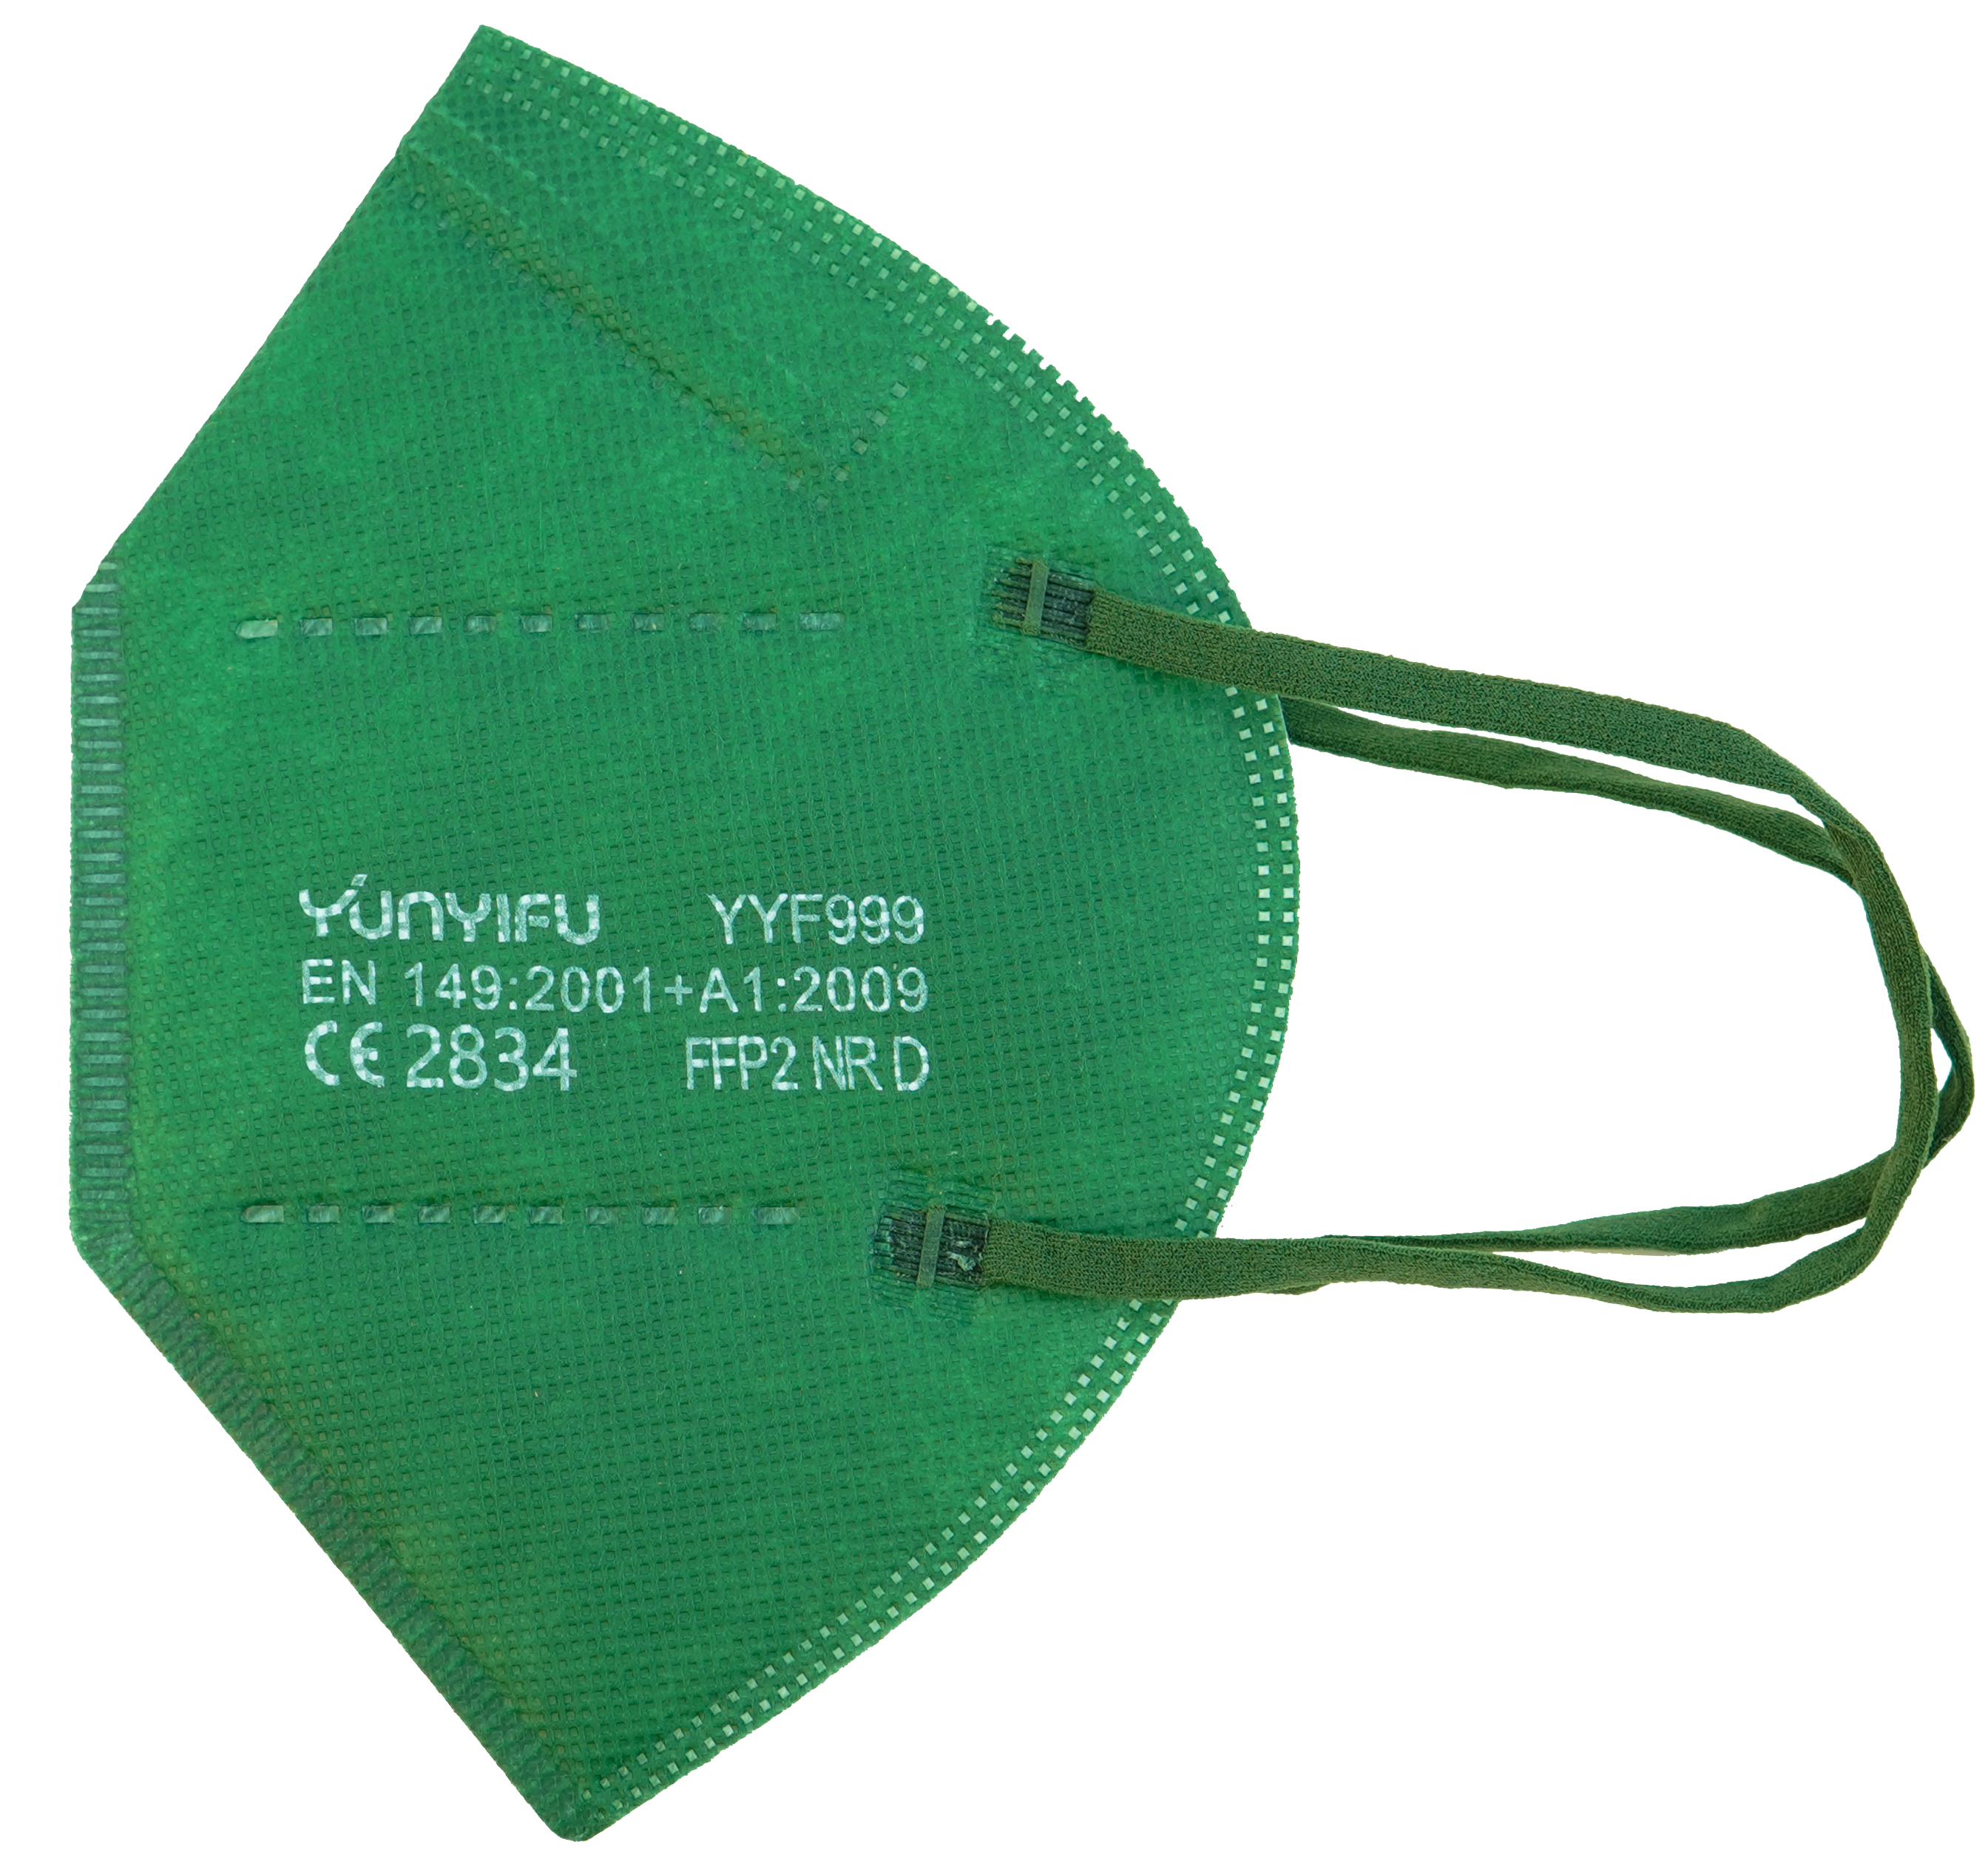 Atemschutz Mundschutz FFP 2 Maske, dunkelgrün, VE = 10 Stück